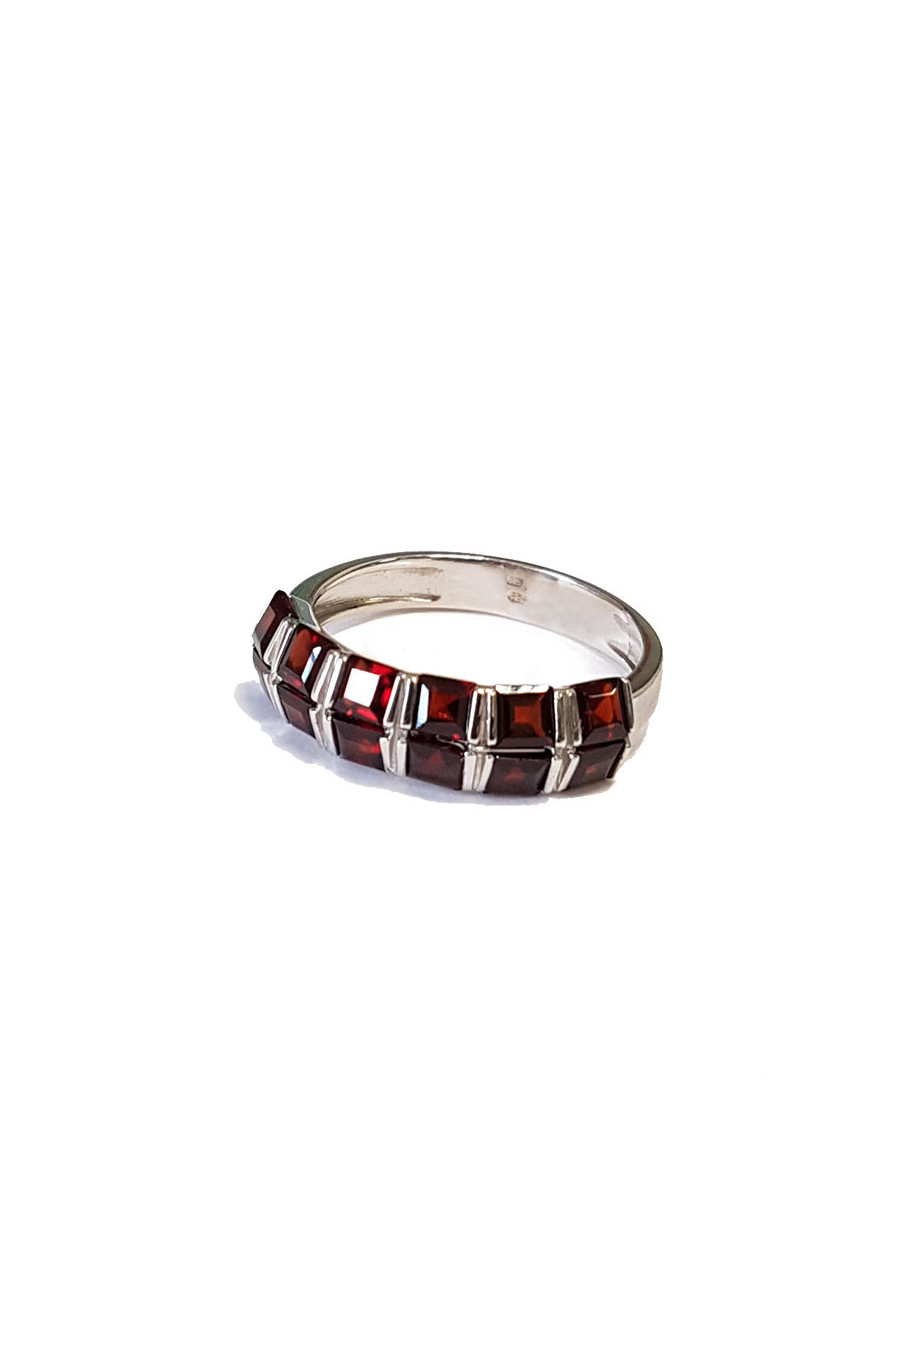 Stříbrný prsten s granátem